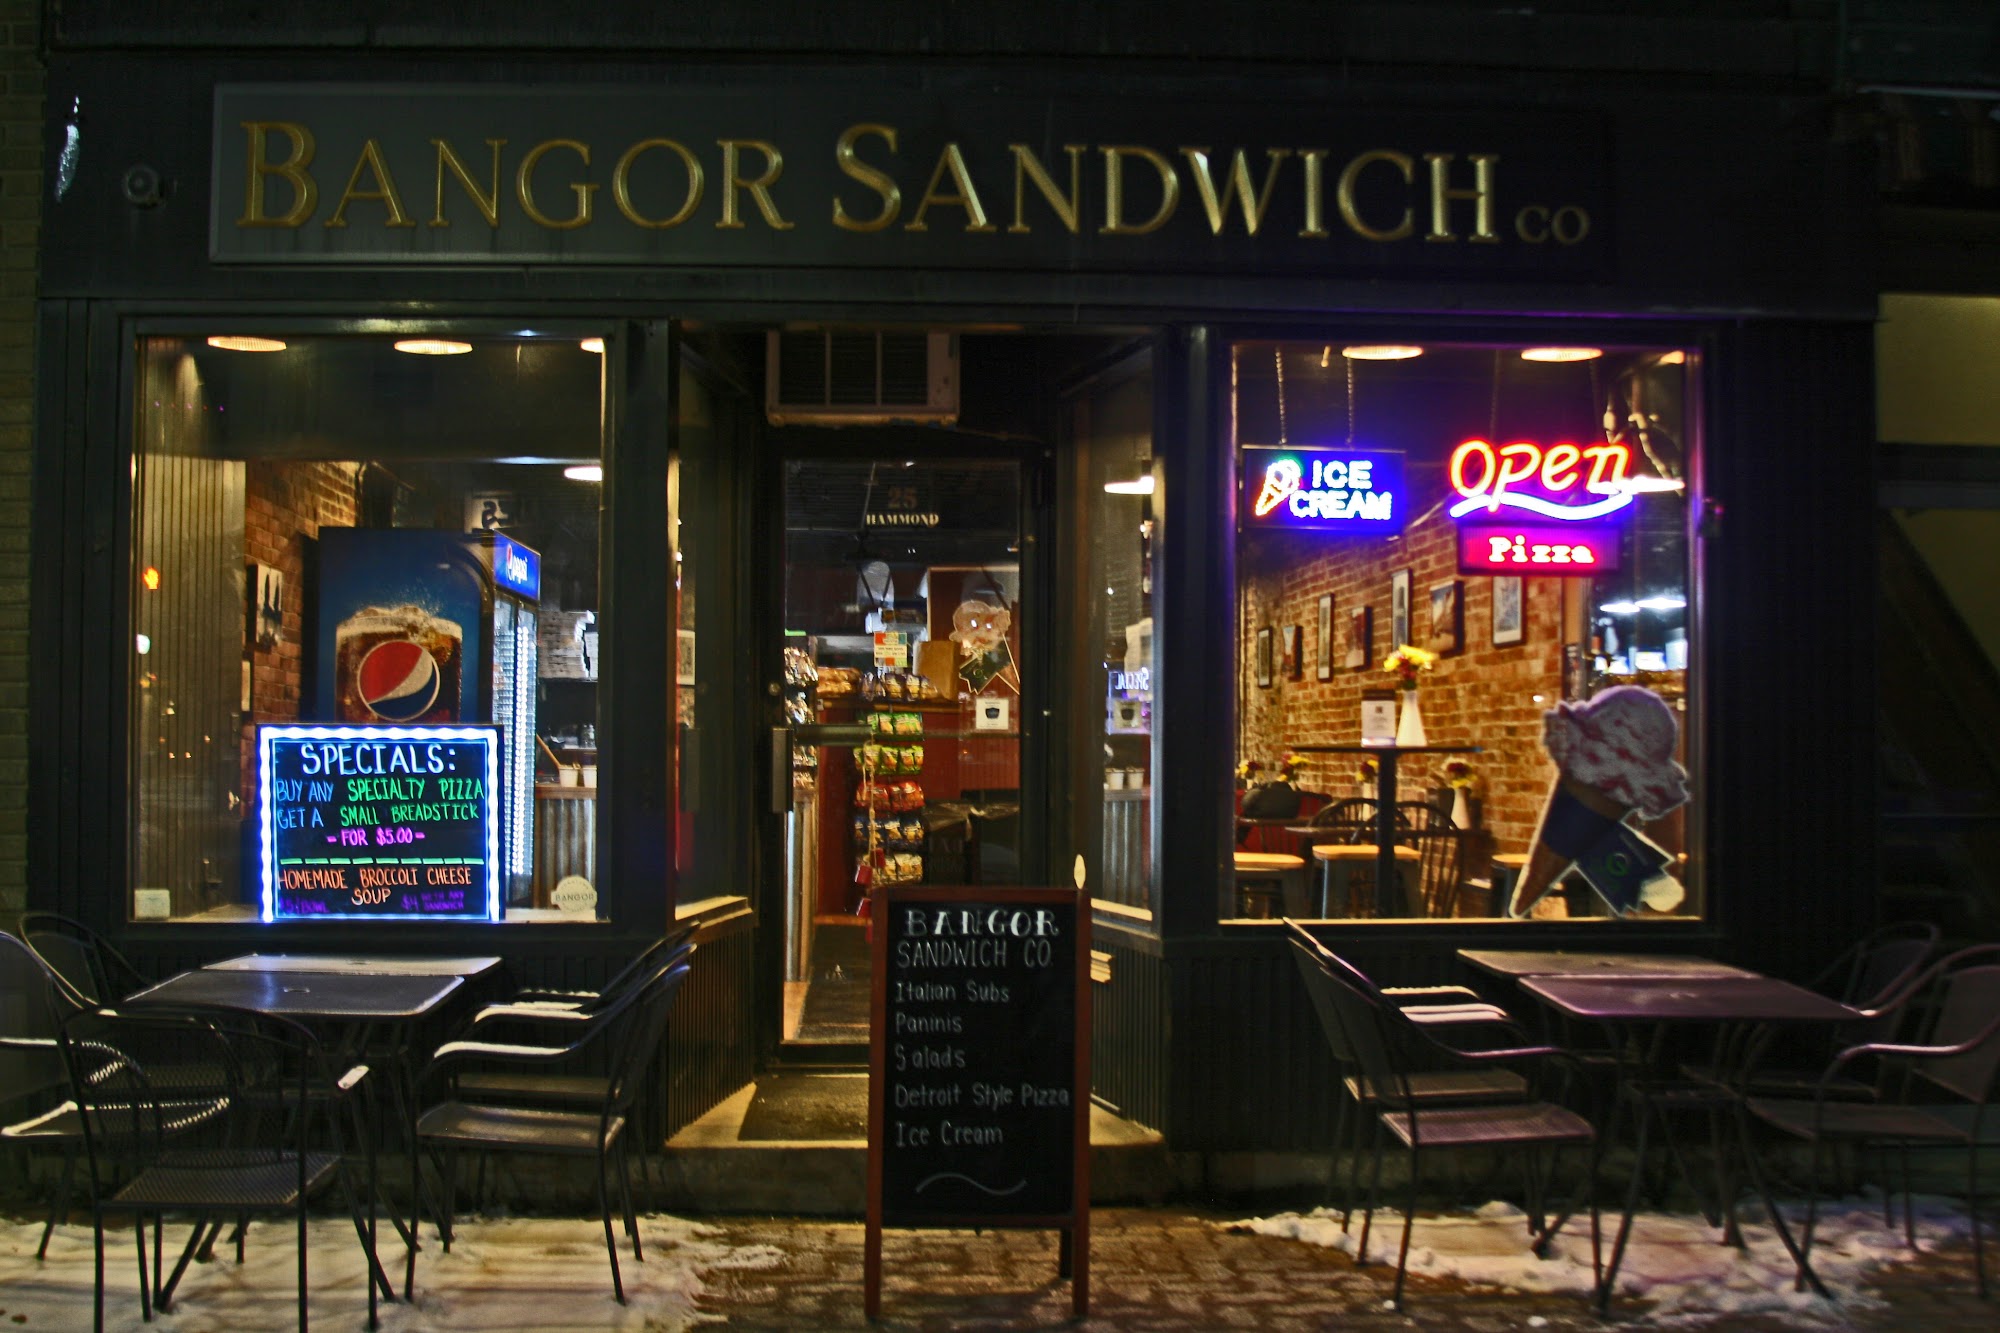 Bangor Sandwich co